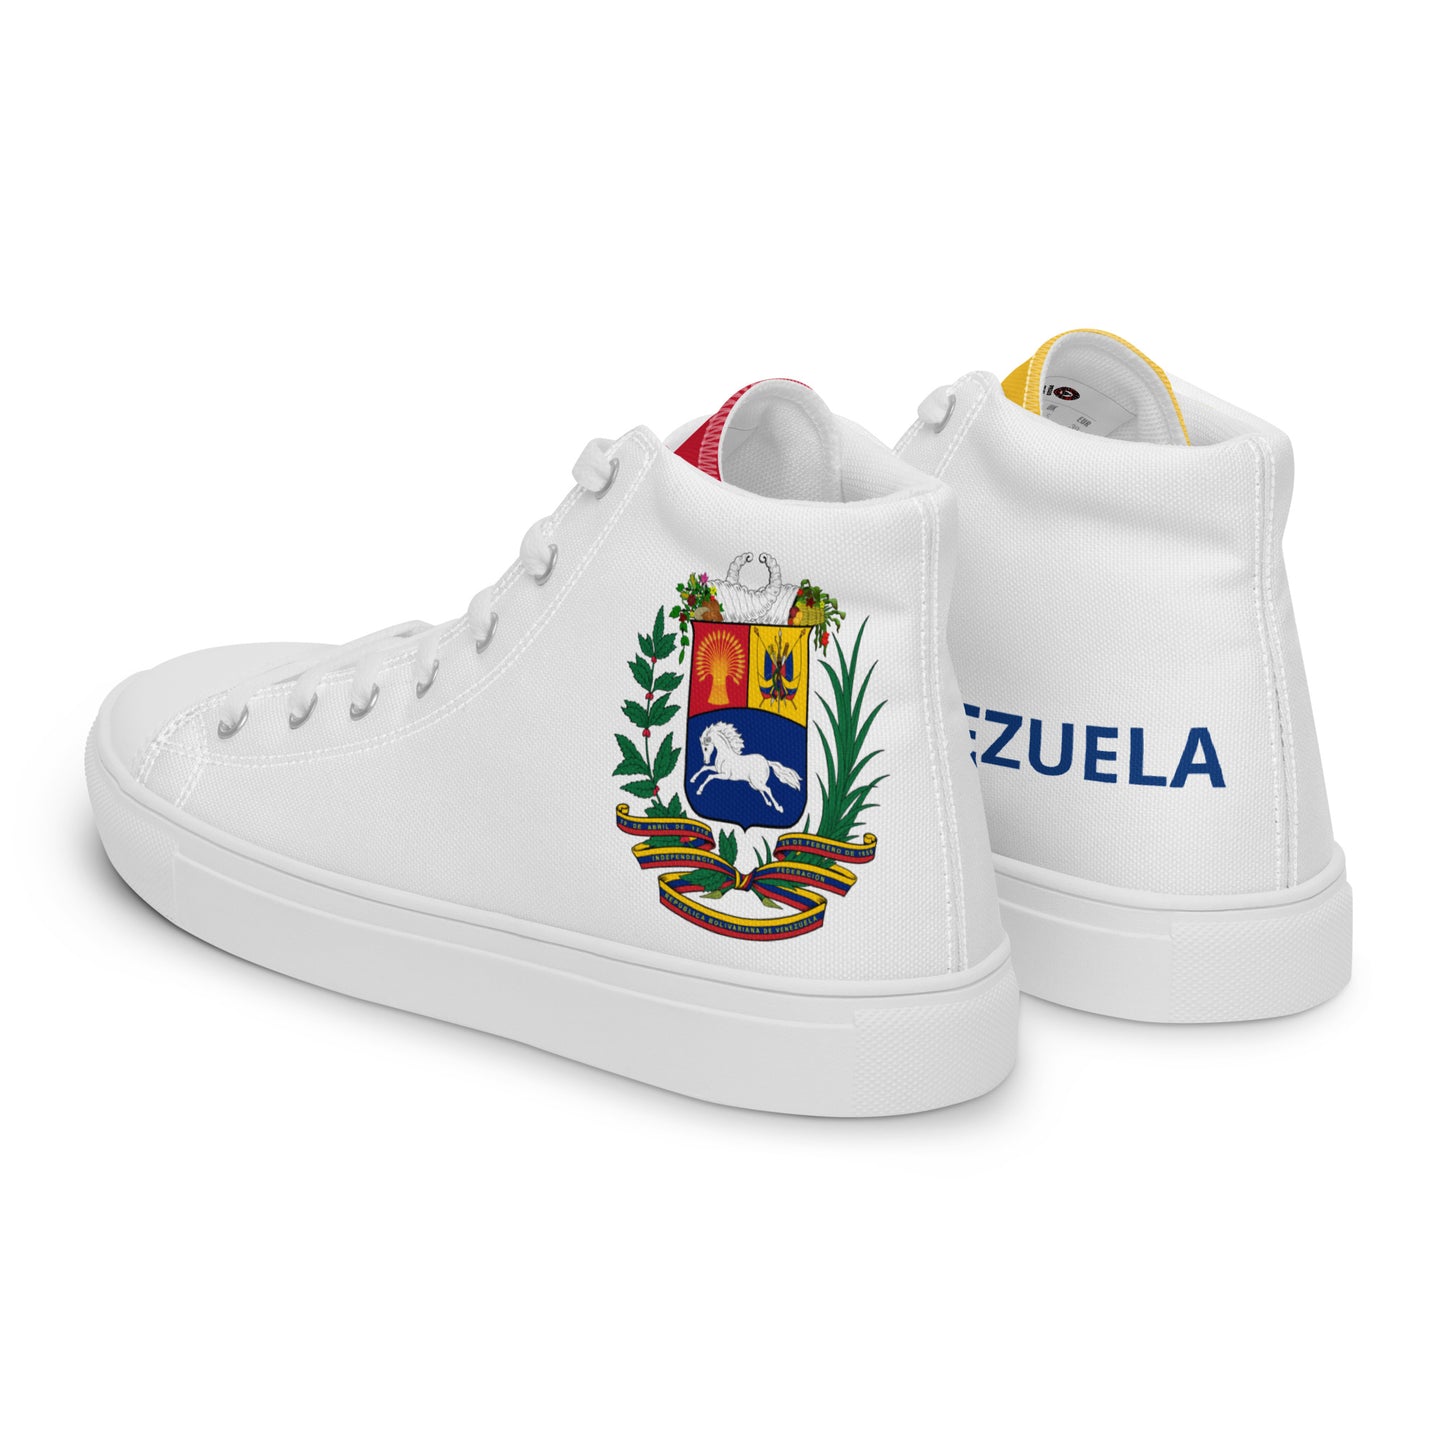 Venezuela - Men - White - High top shoes